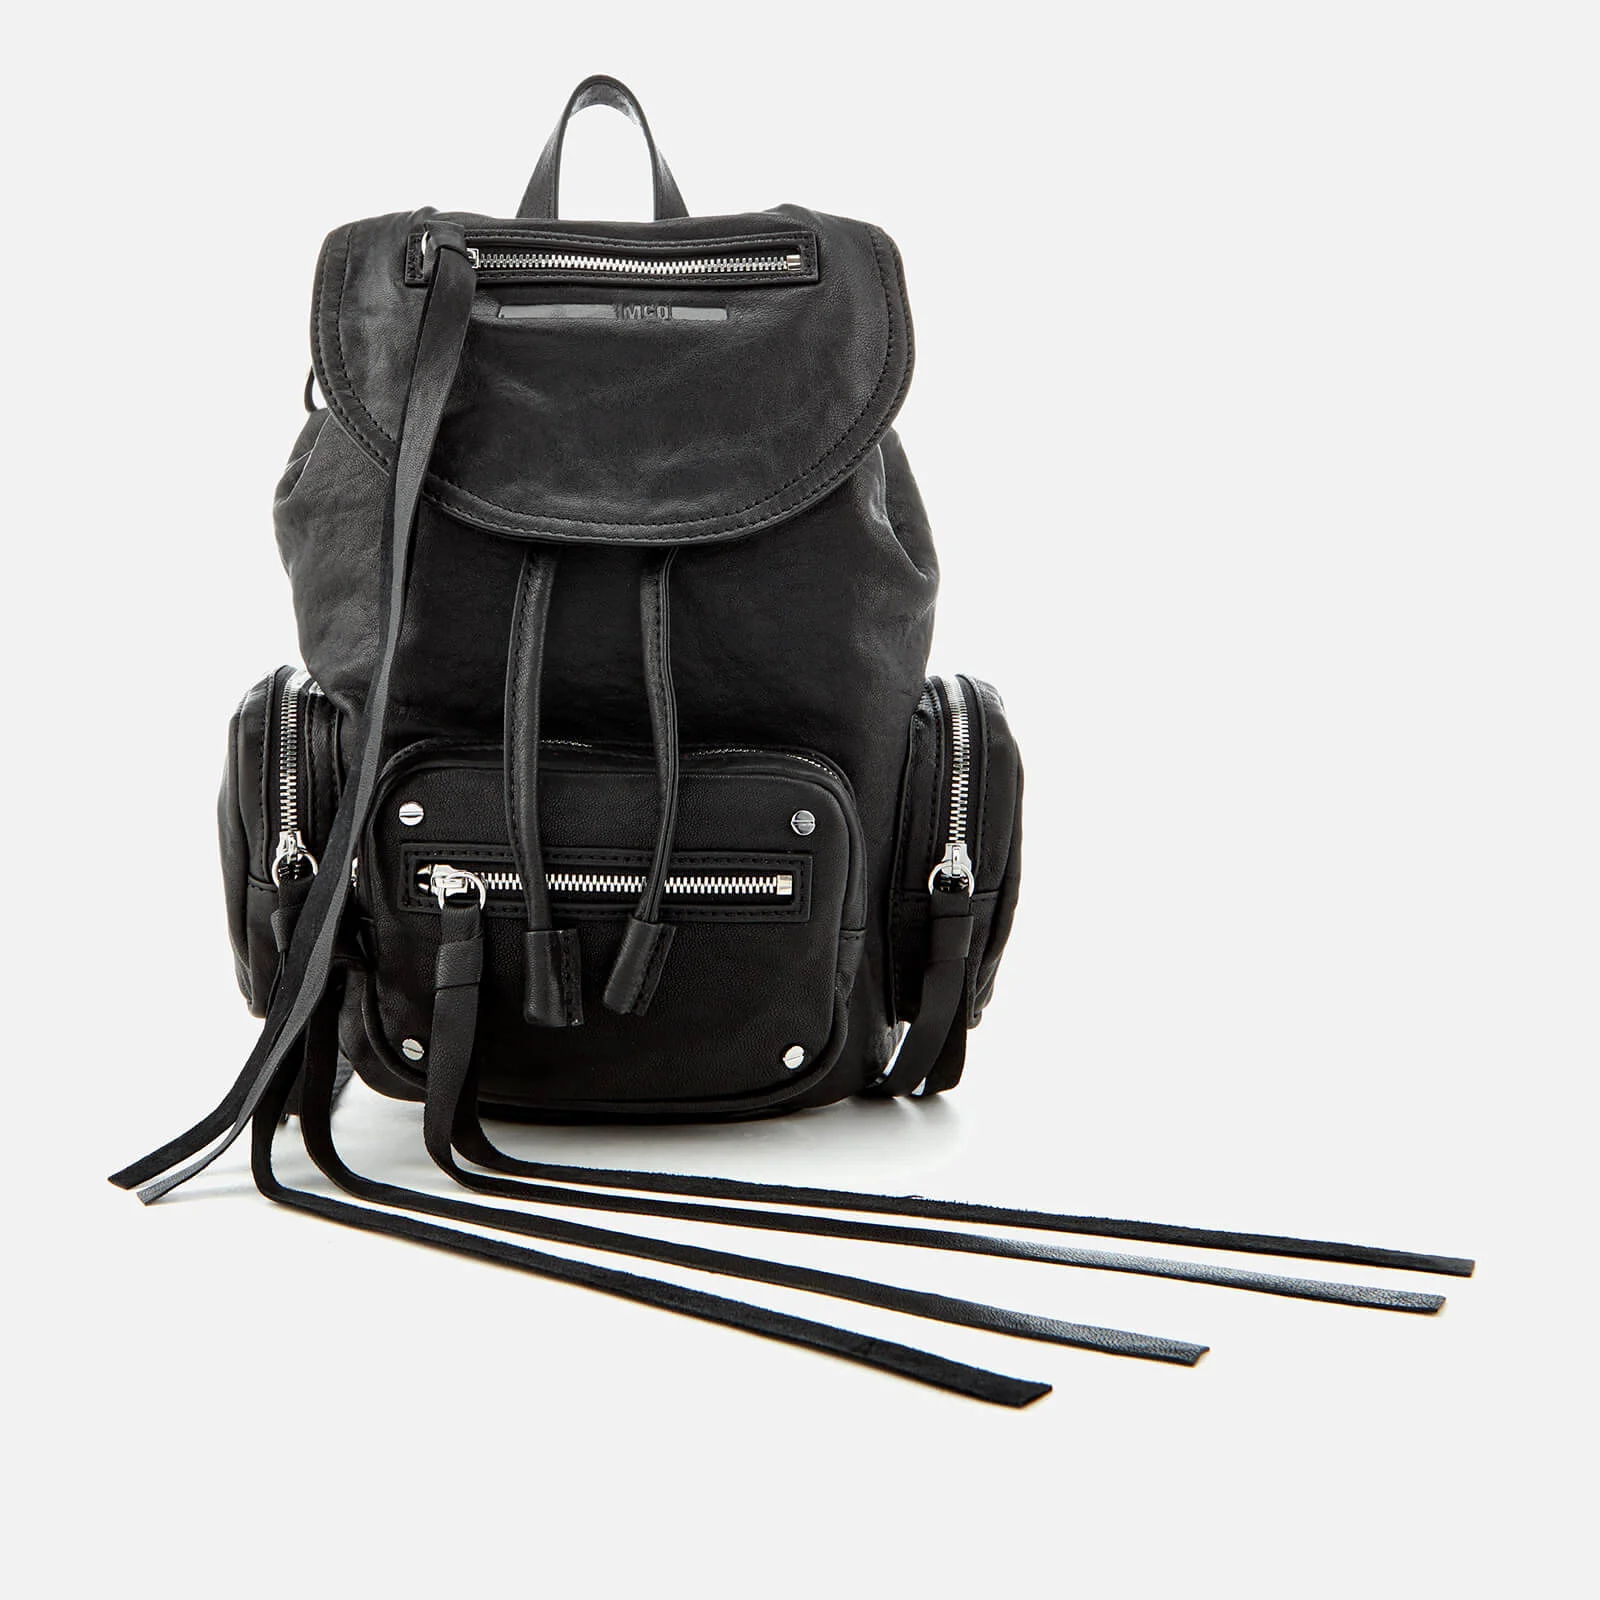 McQ Alexander McQueen Women's Mini Convertible Drawstring Backpack - Black Image 1